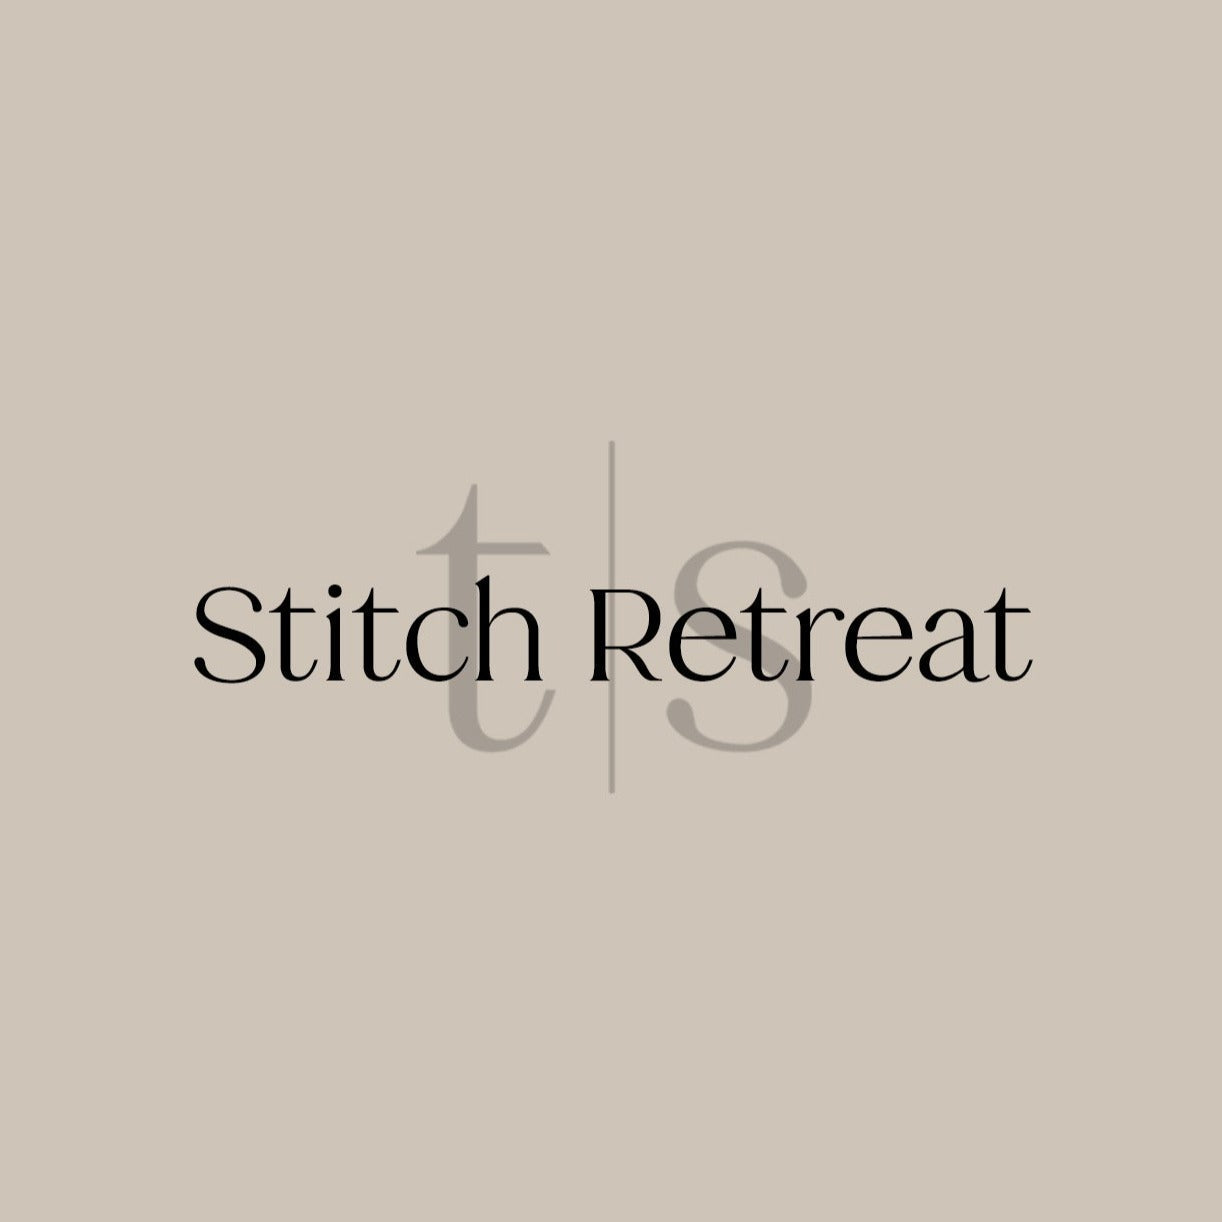 Stitch Retreat | Oct 13 - 14